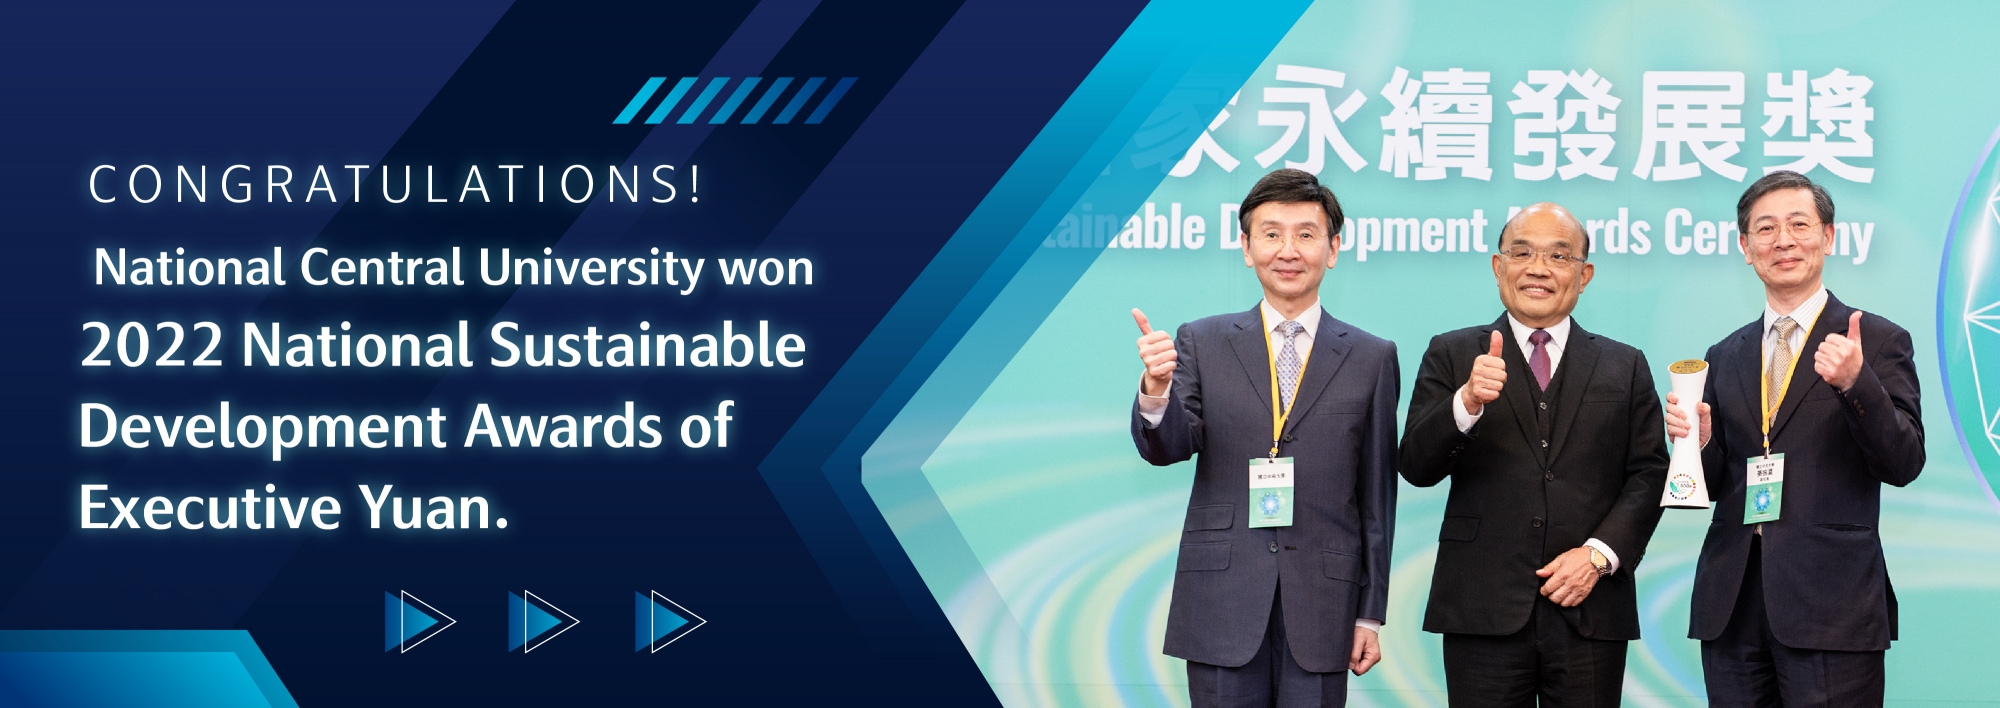 Congratulations! National Central University won 2022 National Sustainable Development Awards of Executive Yuan.